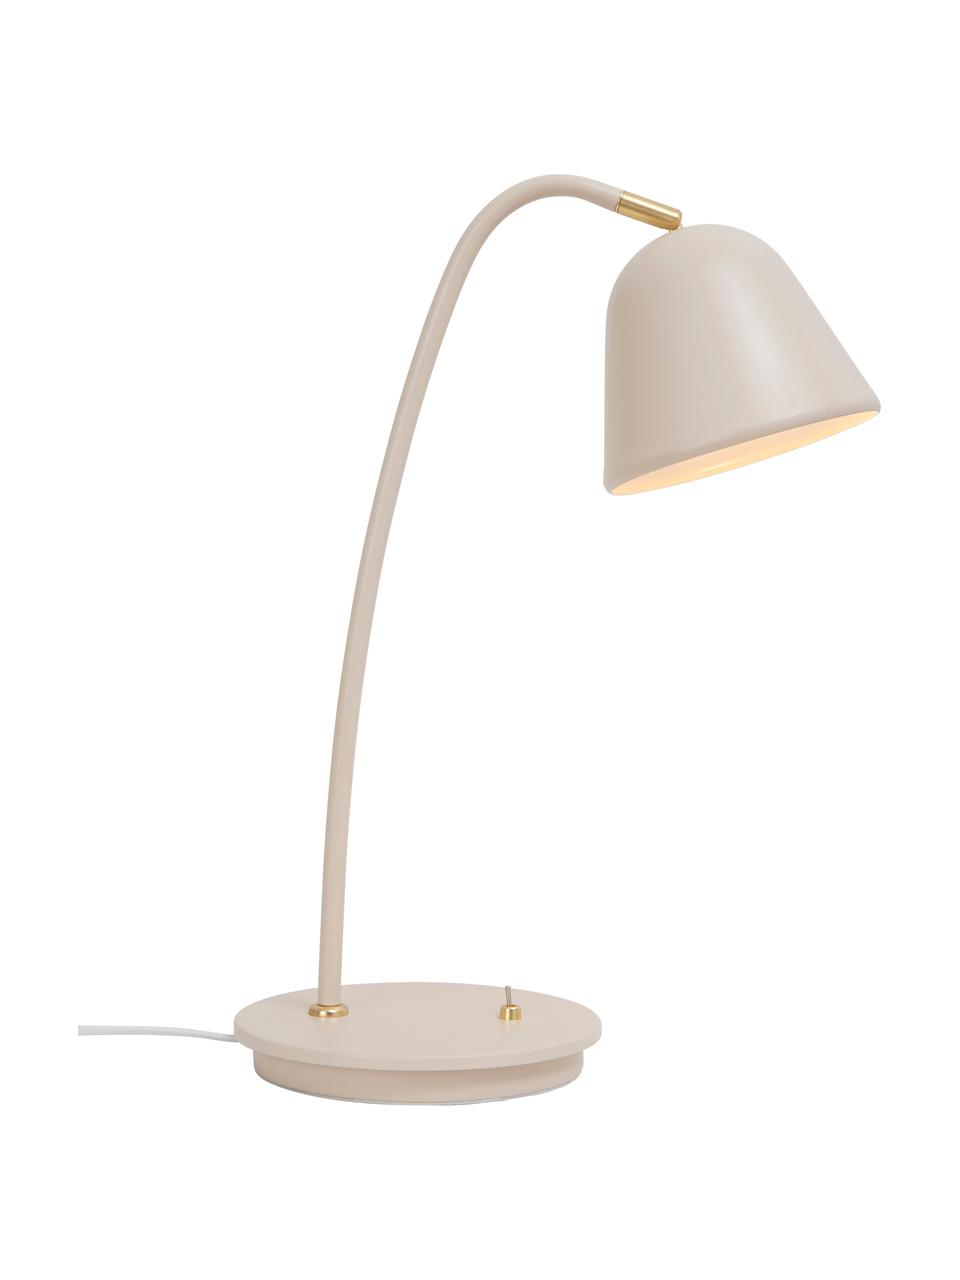 Bureaulamp Fleur in beige, Lampenkap: gecoat metaal, Lampvoet: gecoat metaal, Decoratie: metaal, Beige, 20 x 49 cm